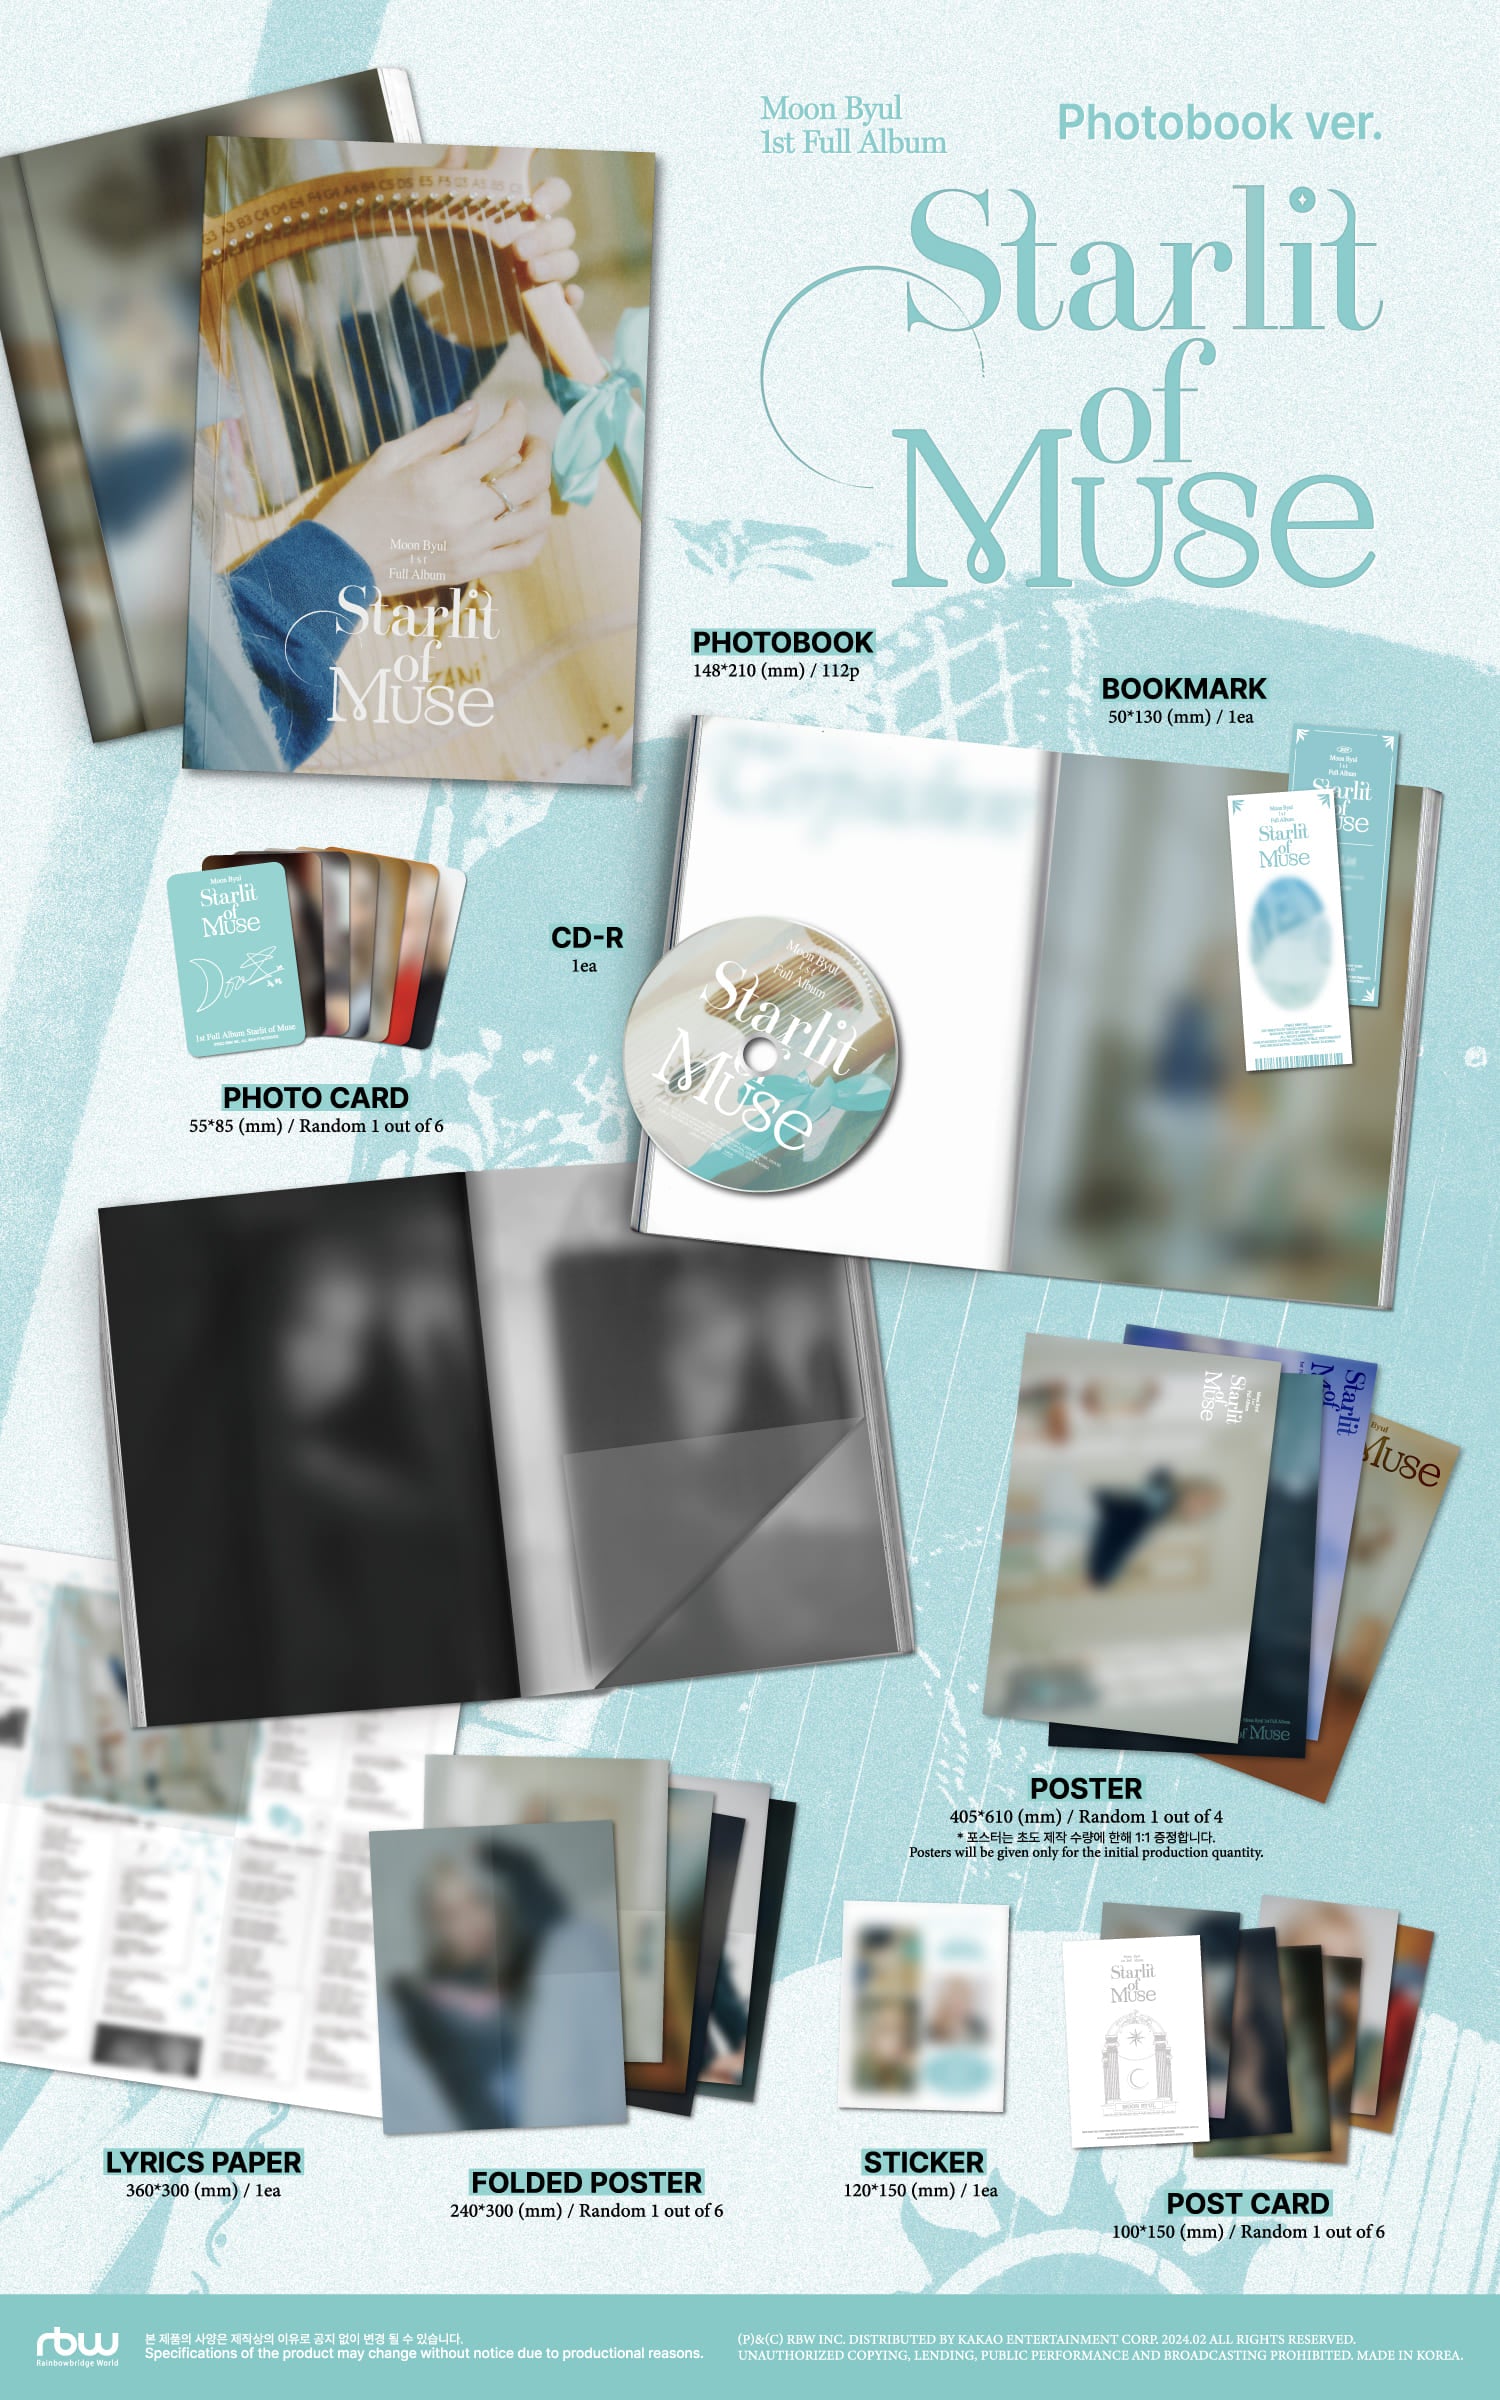 MOON BYUL 1st Full Album Starlit of Muse (Photobook Version)